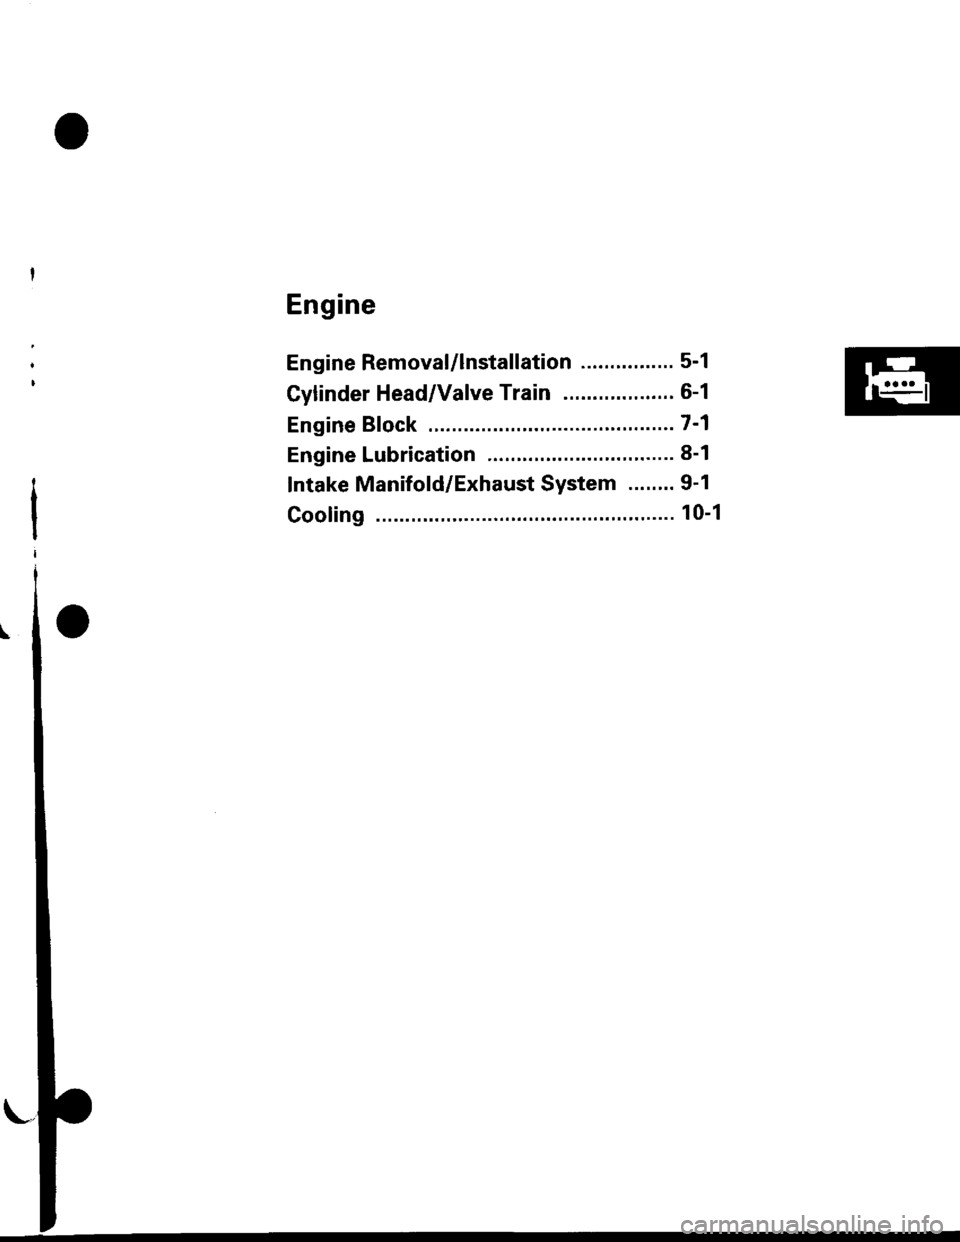 HONDA CIVIC 1997 6.G Service Manual Engine
Engine Removal/lnstallation ................ 5-1
Gylinder Head/Valve Train ................... 6-1
Engine Bfock .......... ...........7-1
Engine Lubrication ........... 8-1
Intake Manifold/Exha